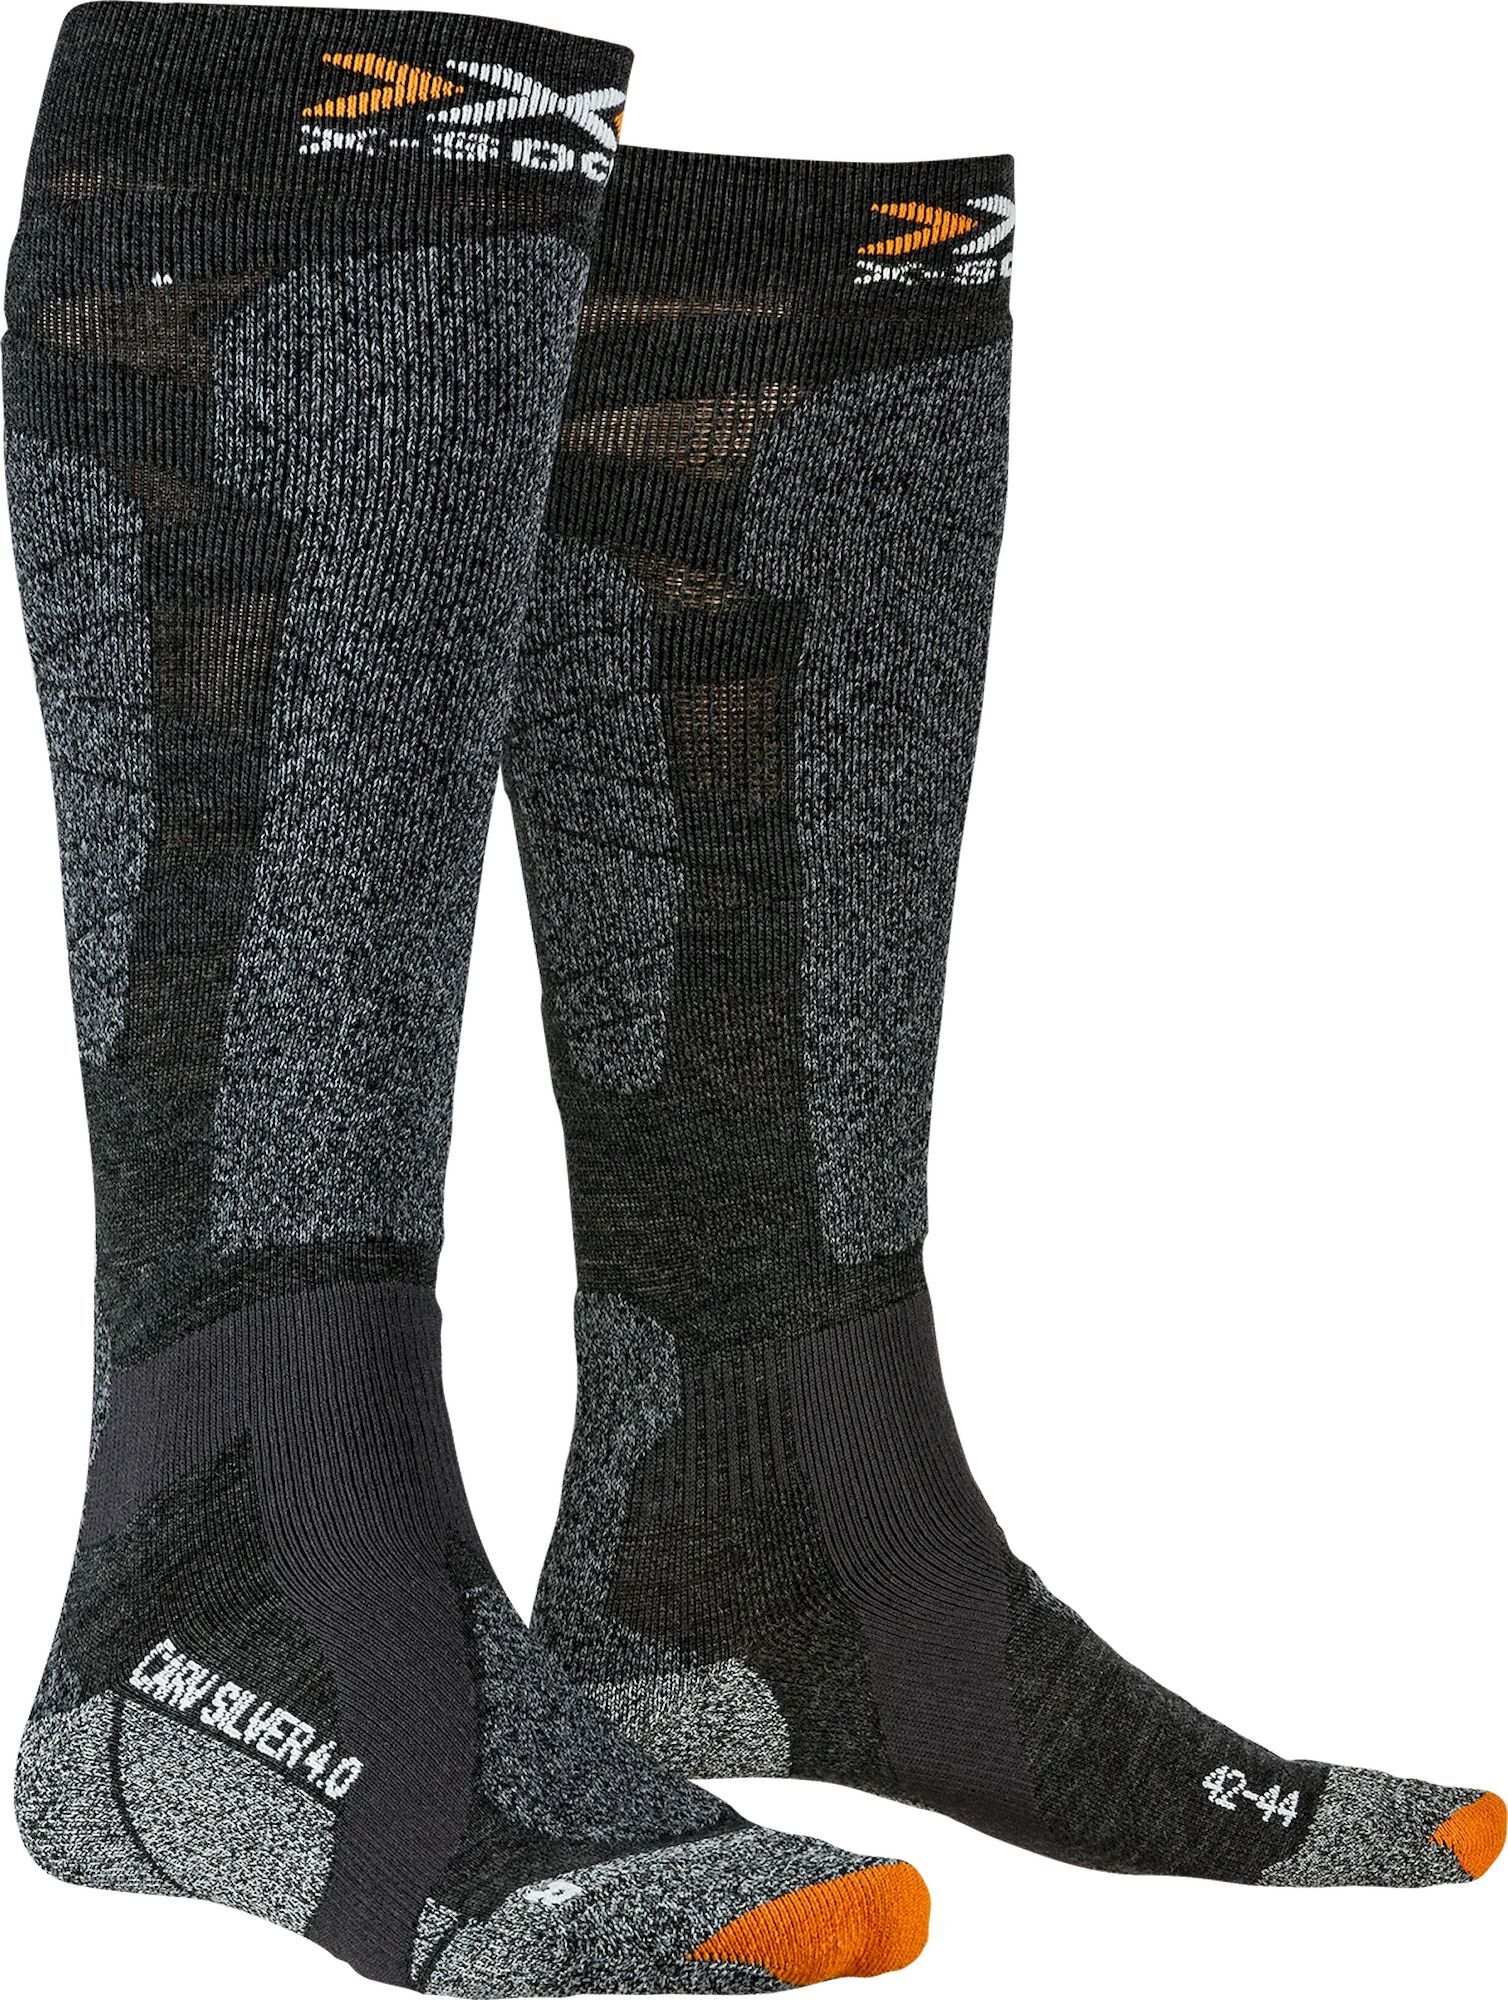 X-Socks Carve Silver 4.0 - Chaussettes ski